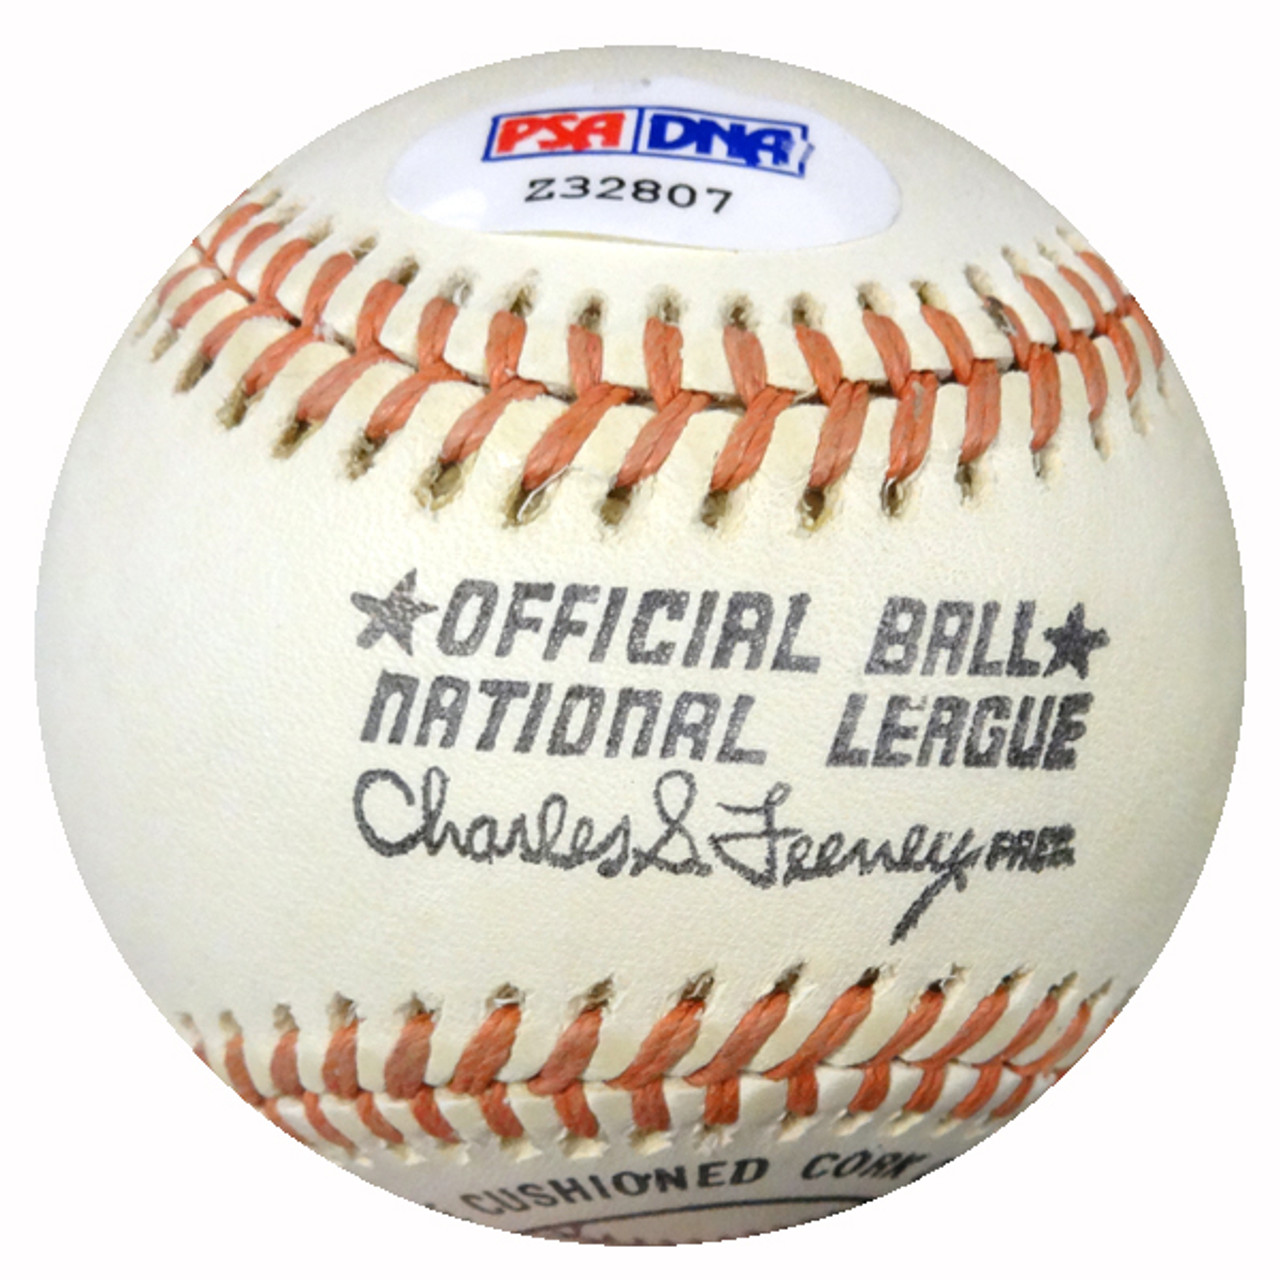 Hank Aaron Autographed Chasing the Dream Exhibit Commemorative Baseball